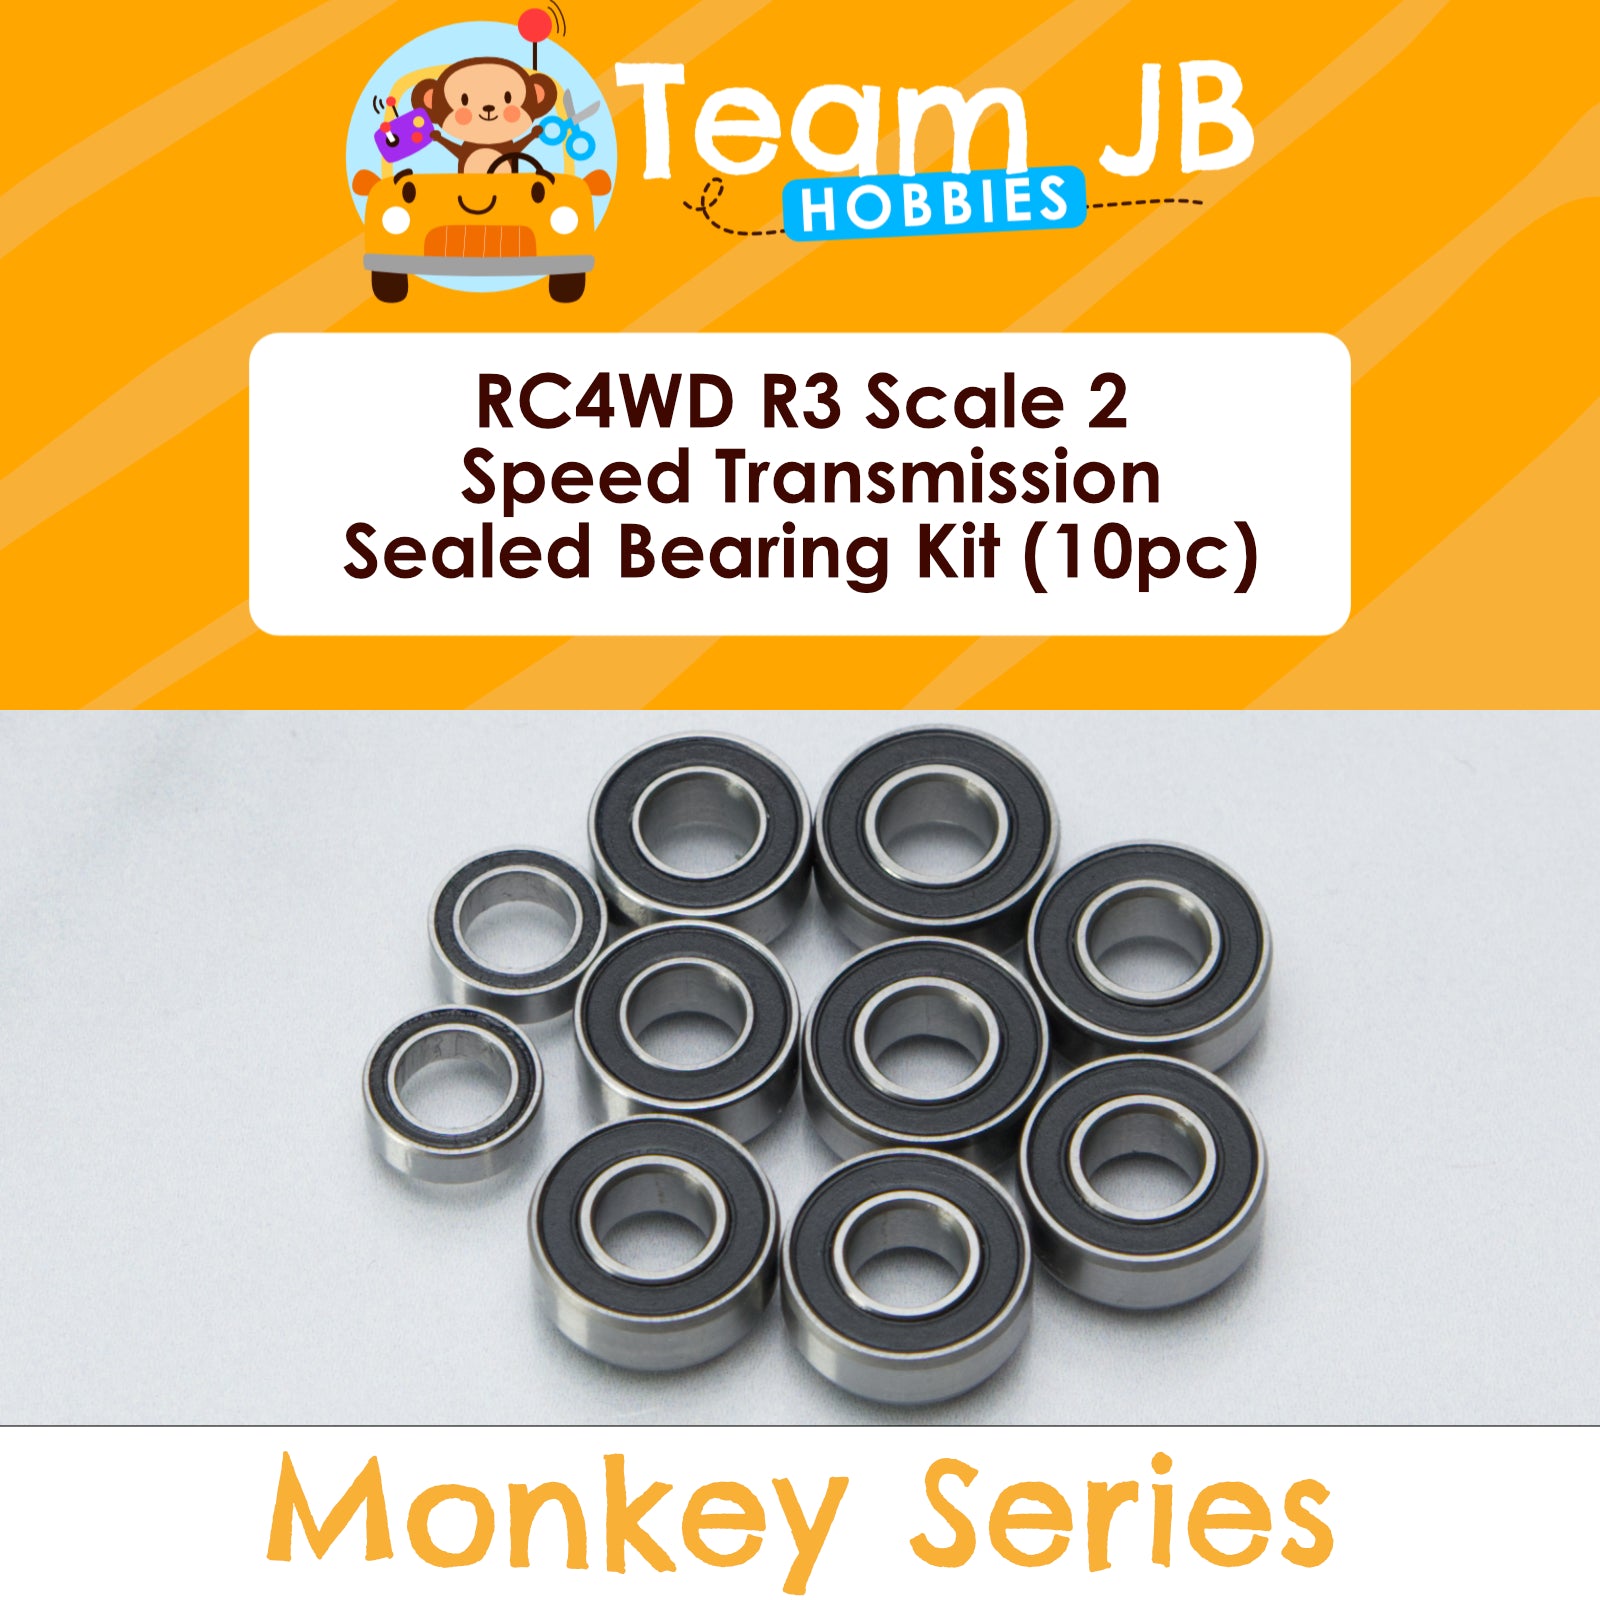 RC4WD R3 Scale 2 Speed Transmission - Sealed Bearing Kit